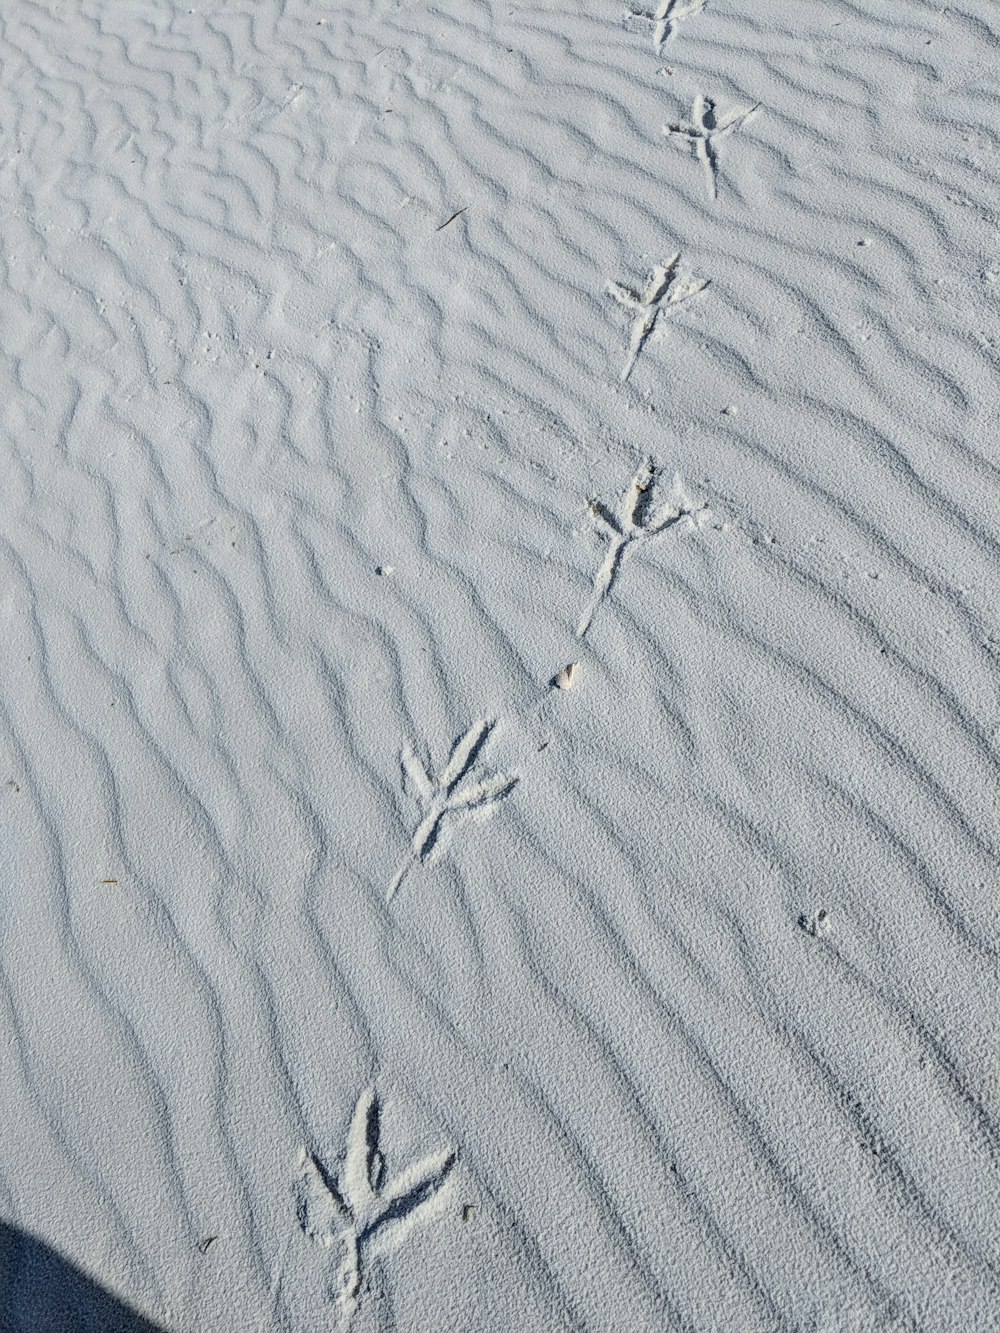 foot steps on sand